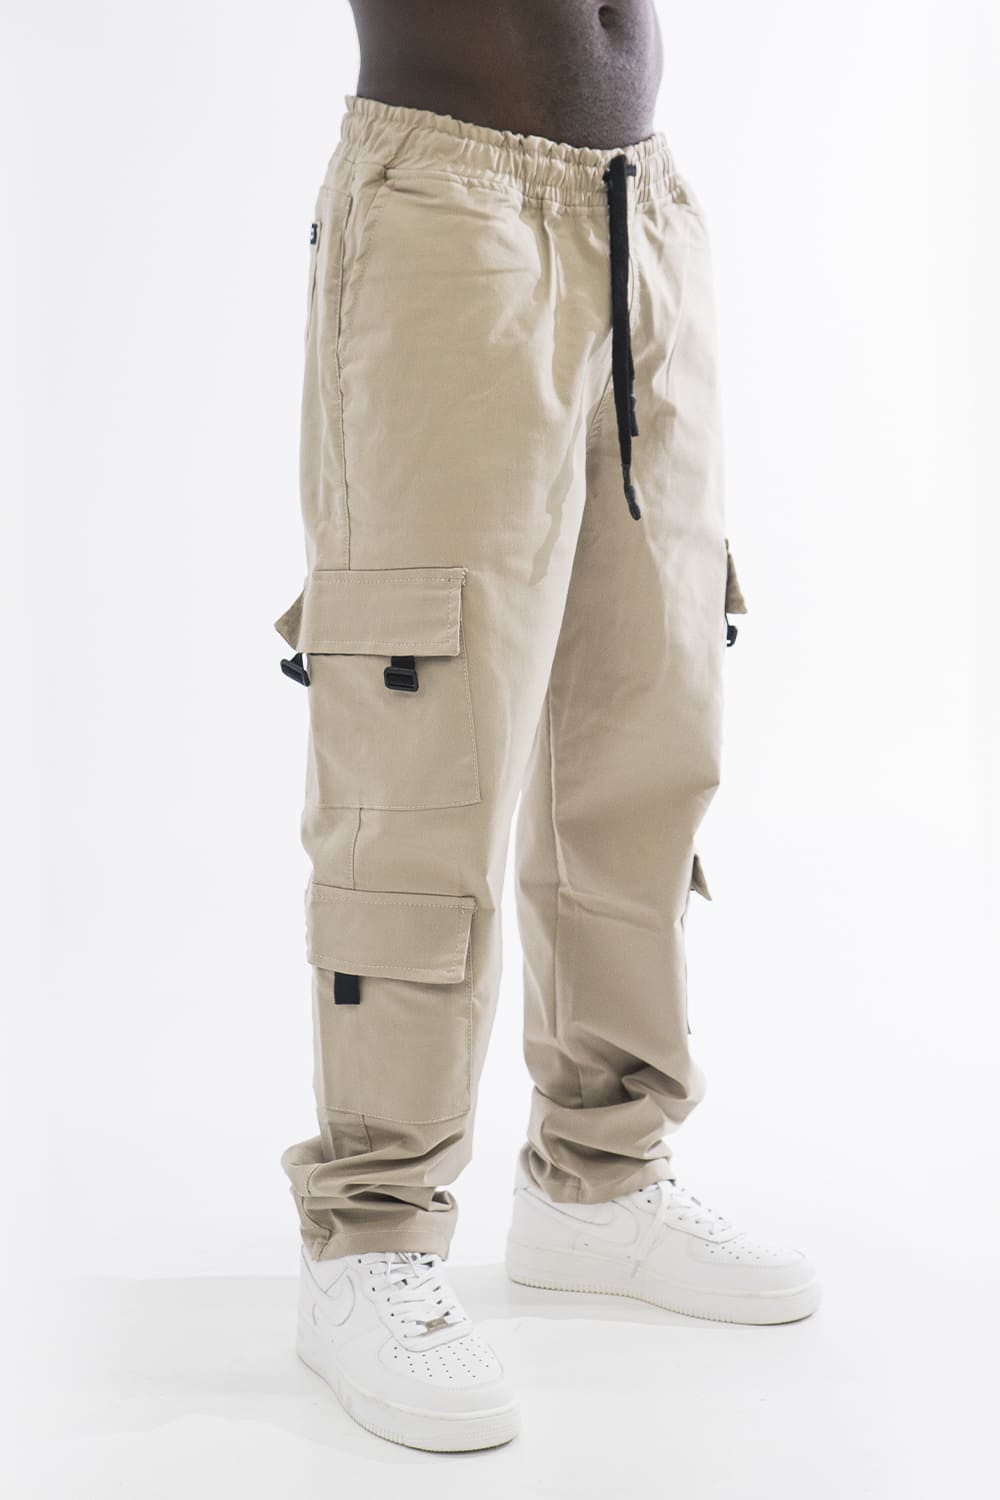 BCO Double Cargo Pants - KHAKI 8040